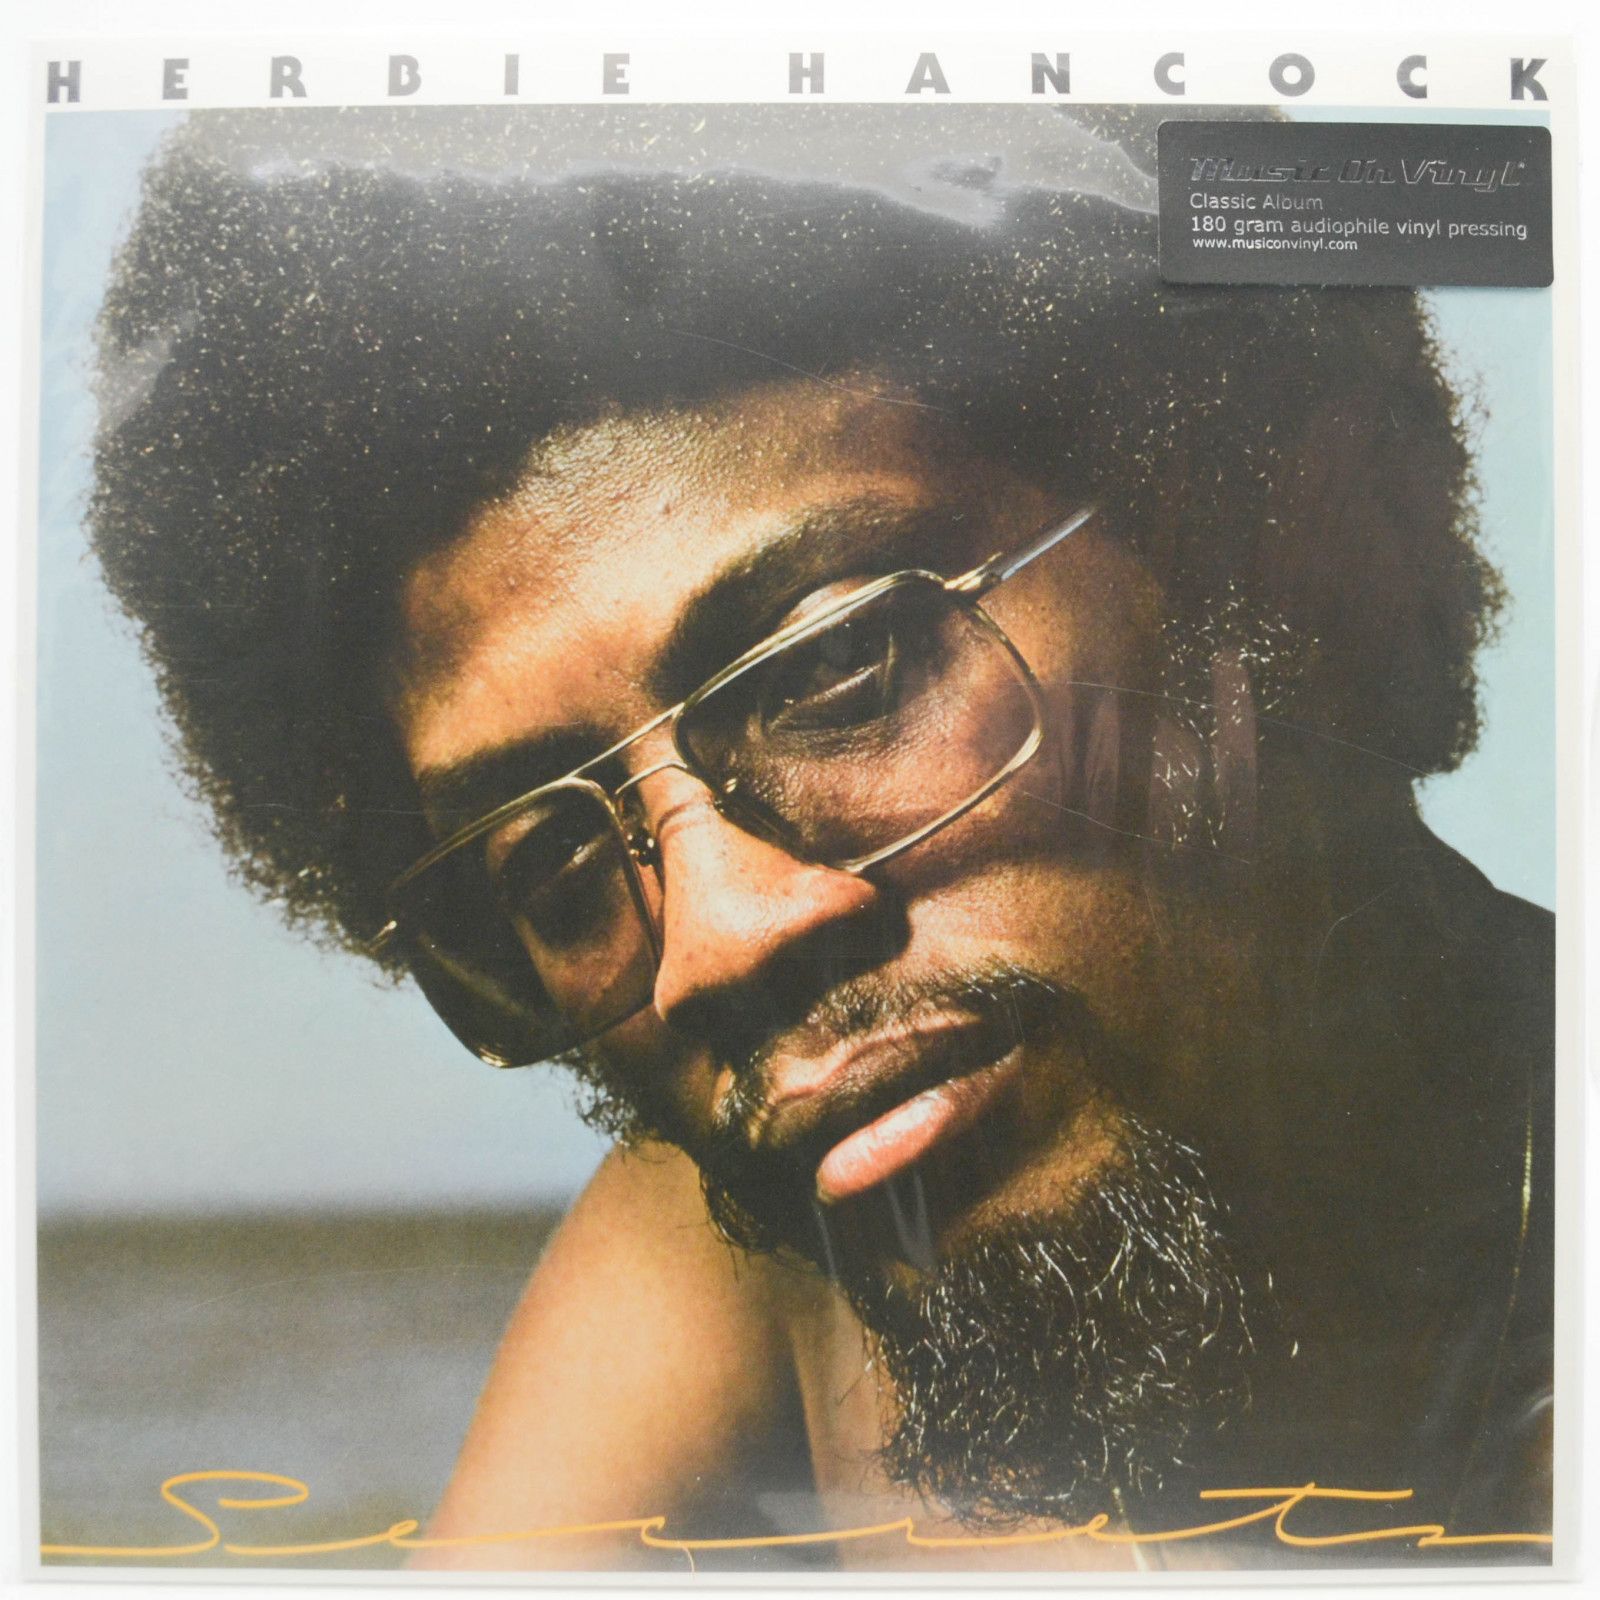 Herbie Hancock — Secrets, 1976